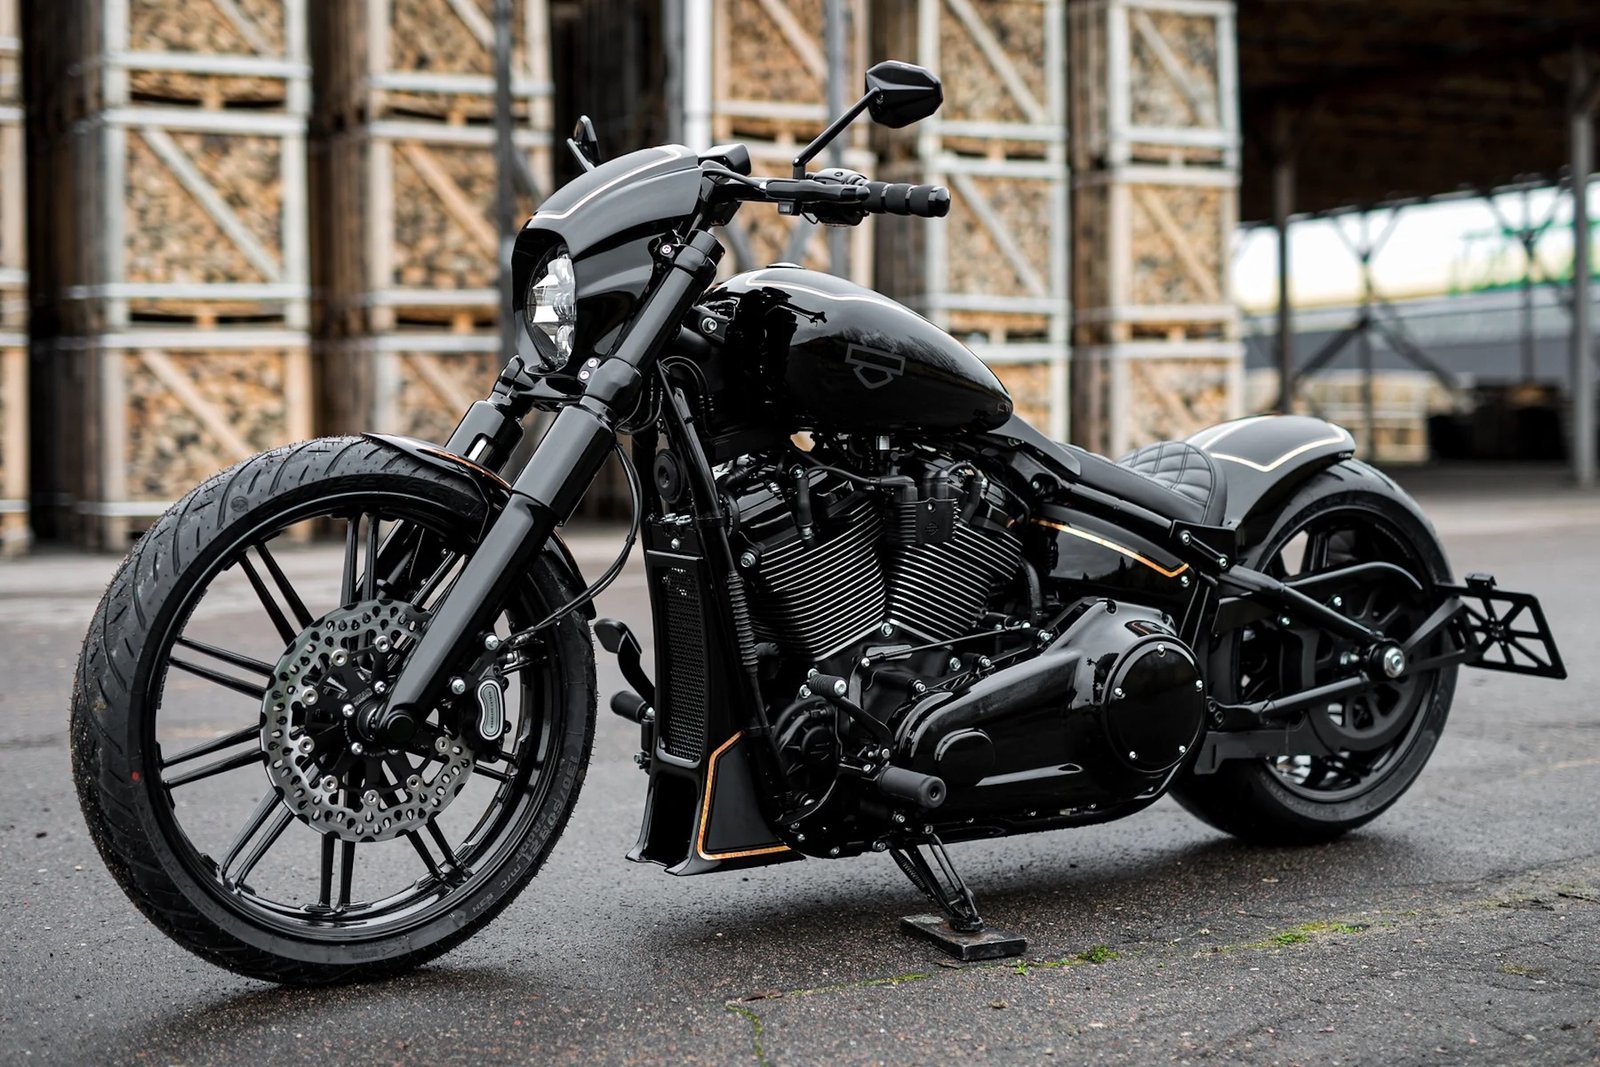  Harley Davidson Sport bike 